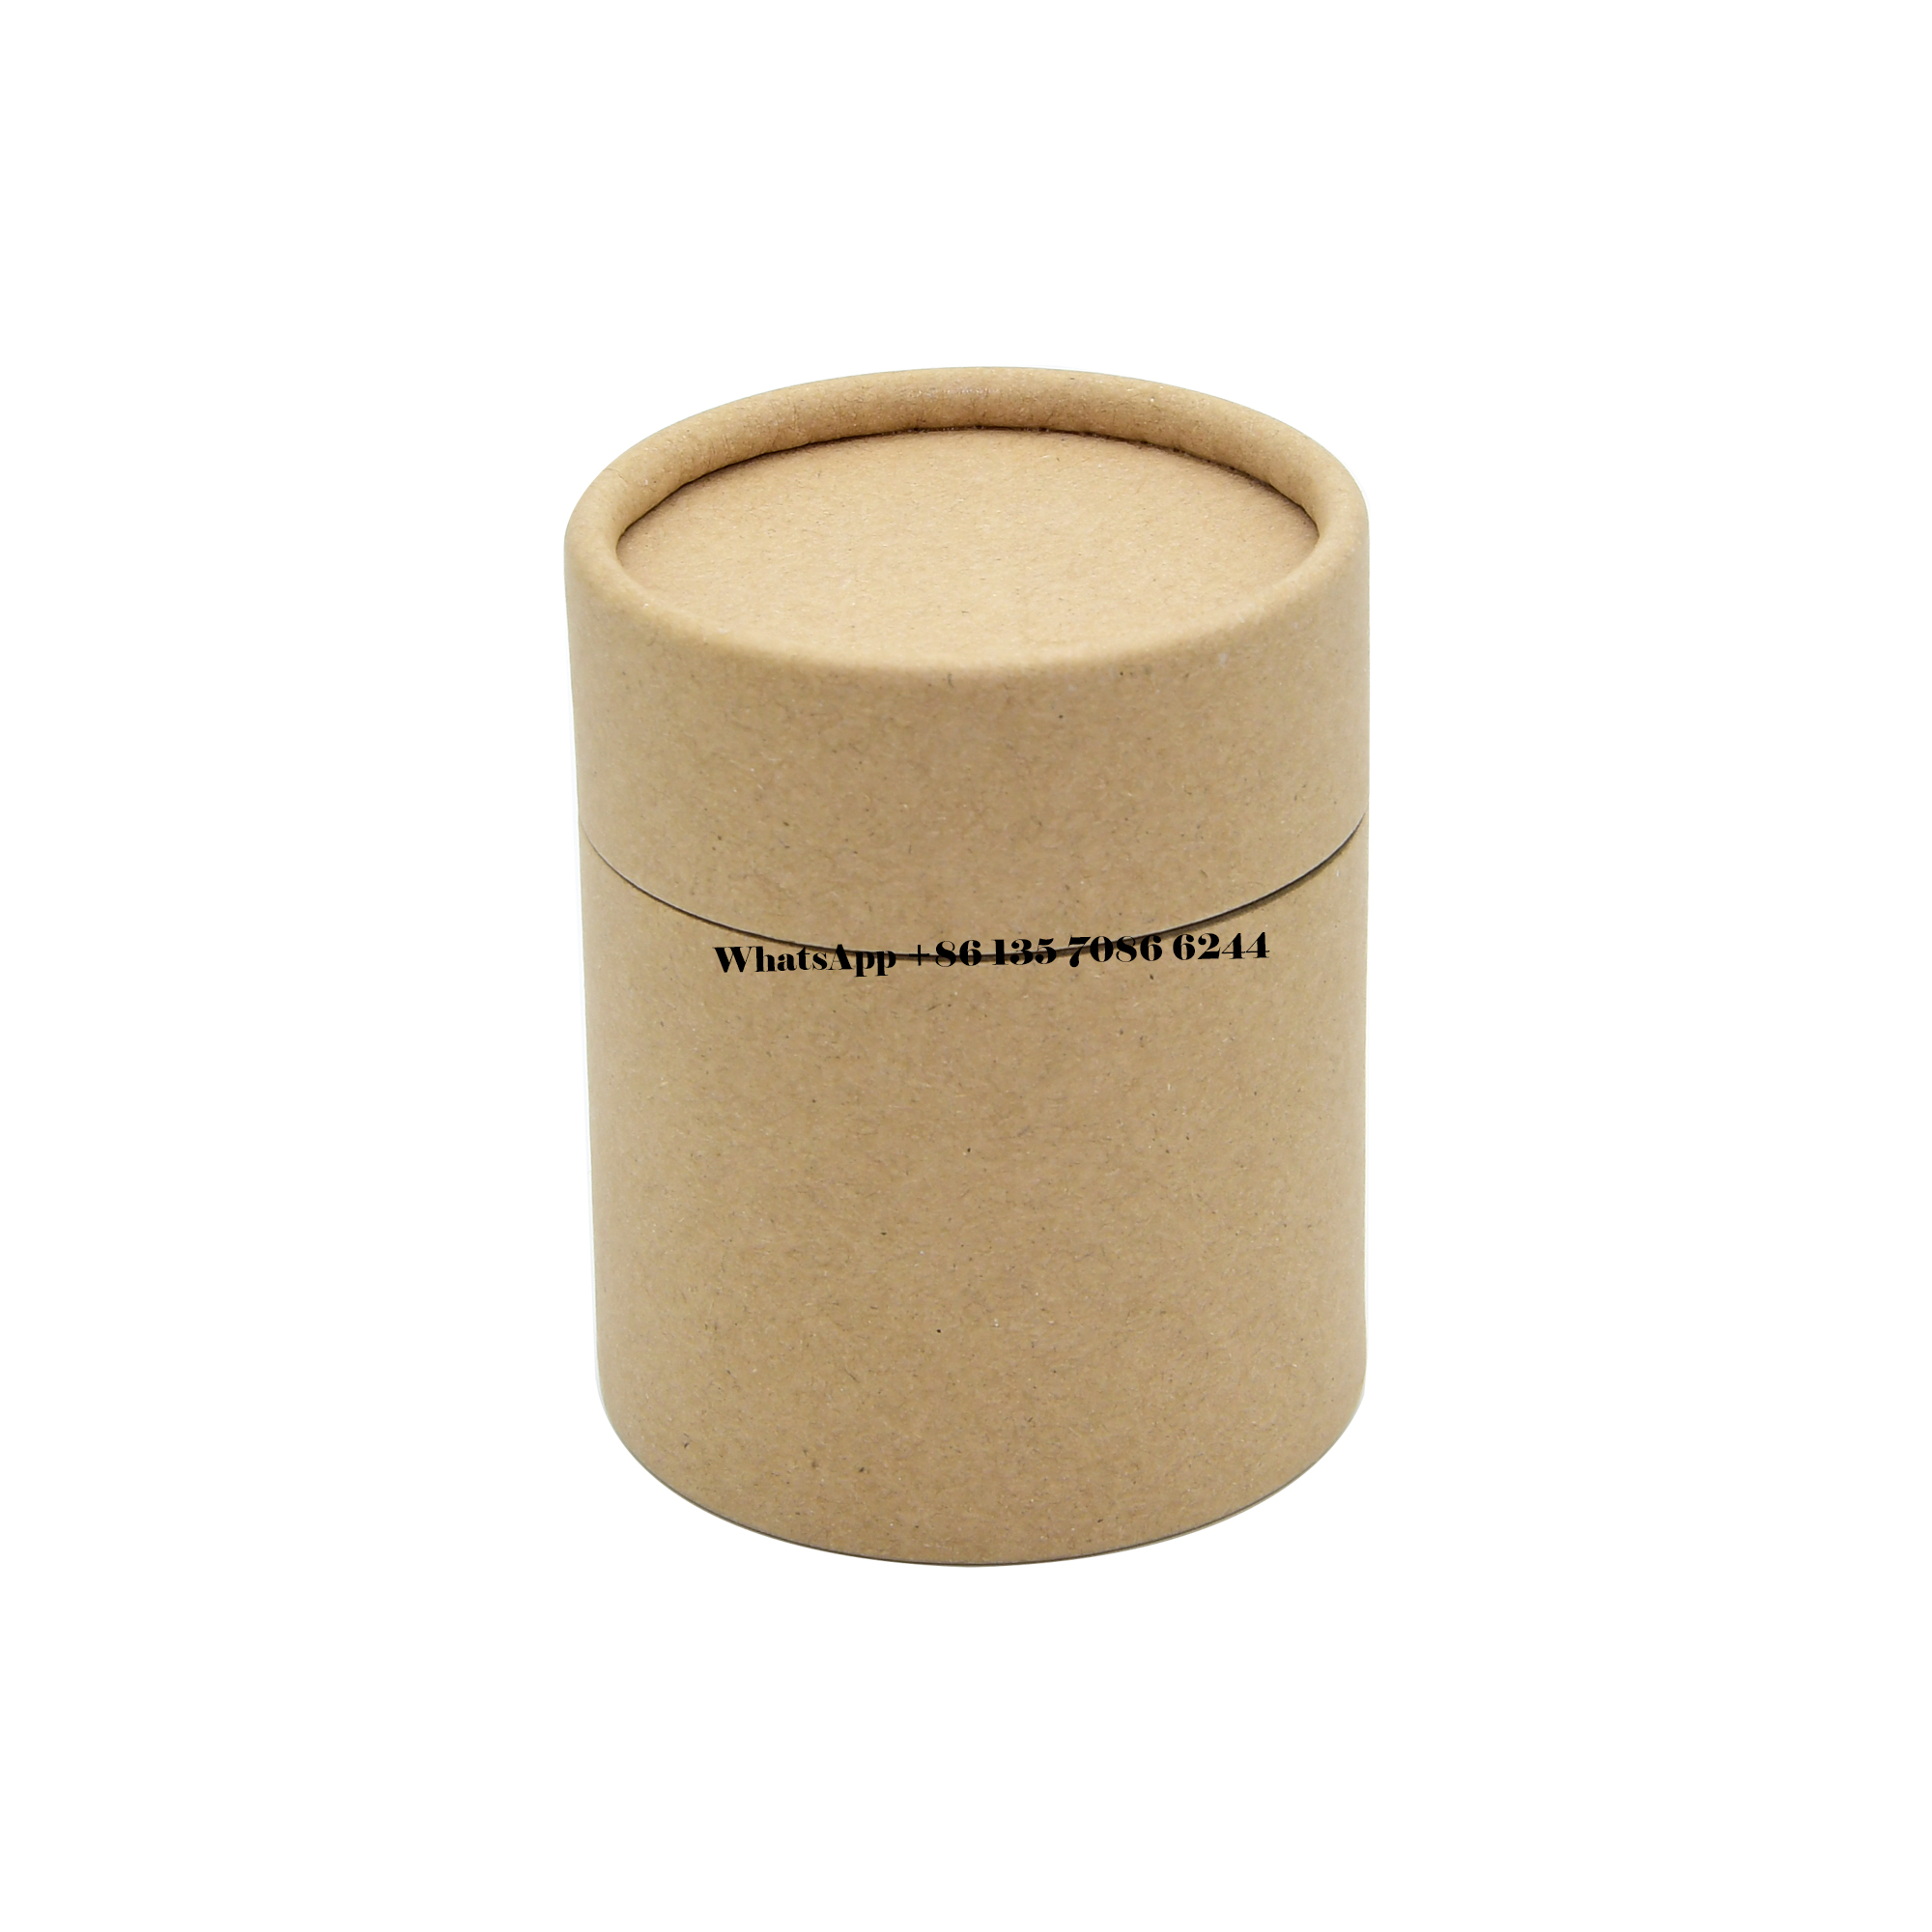  Коробки для упаковки чая в крафт-бумажных тубах премиум-класса  